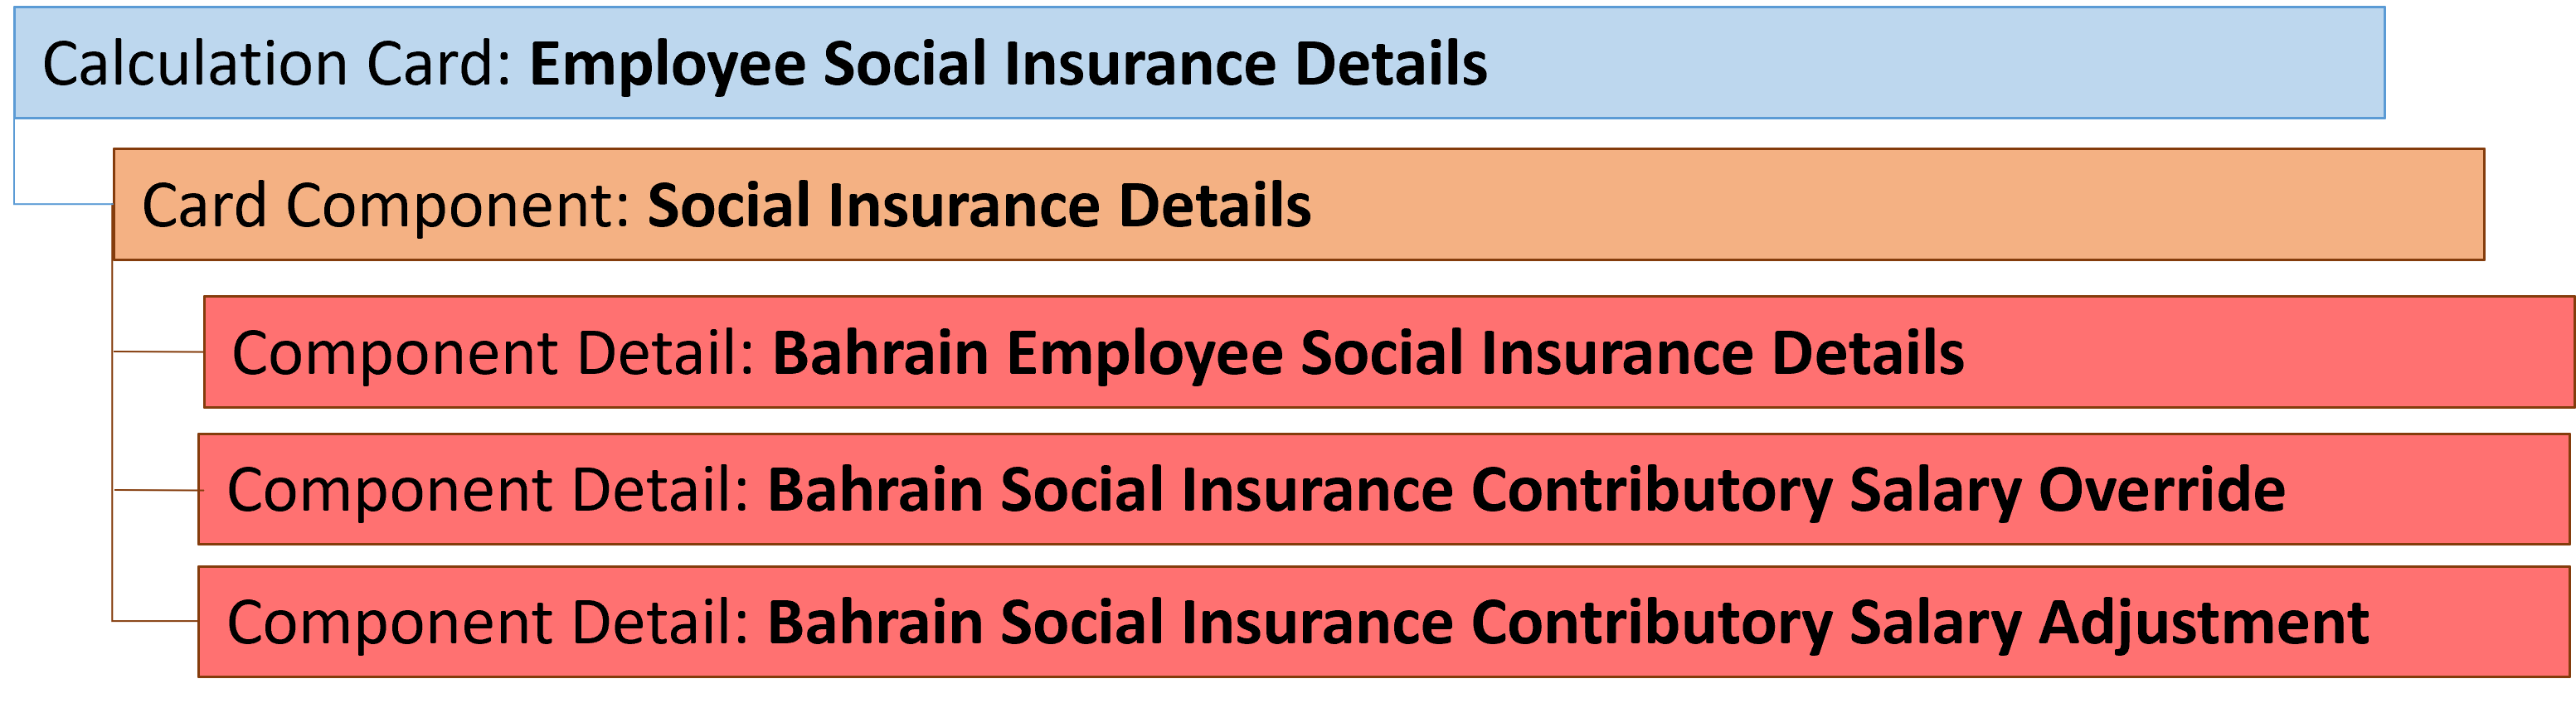 bahrain emp social insurance card component